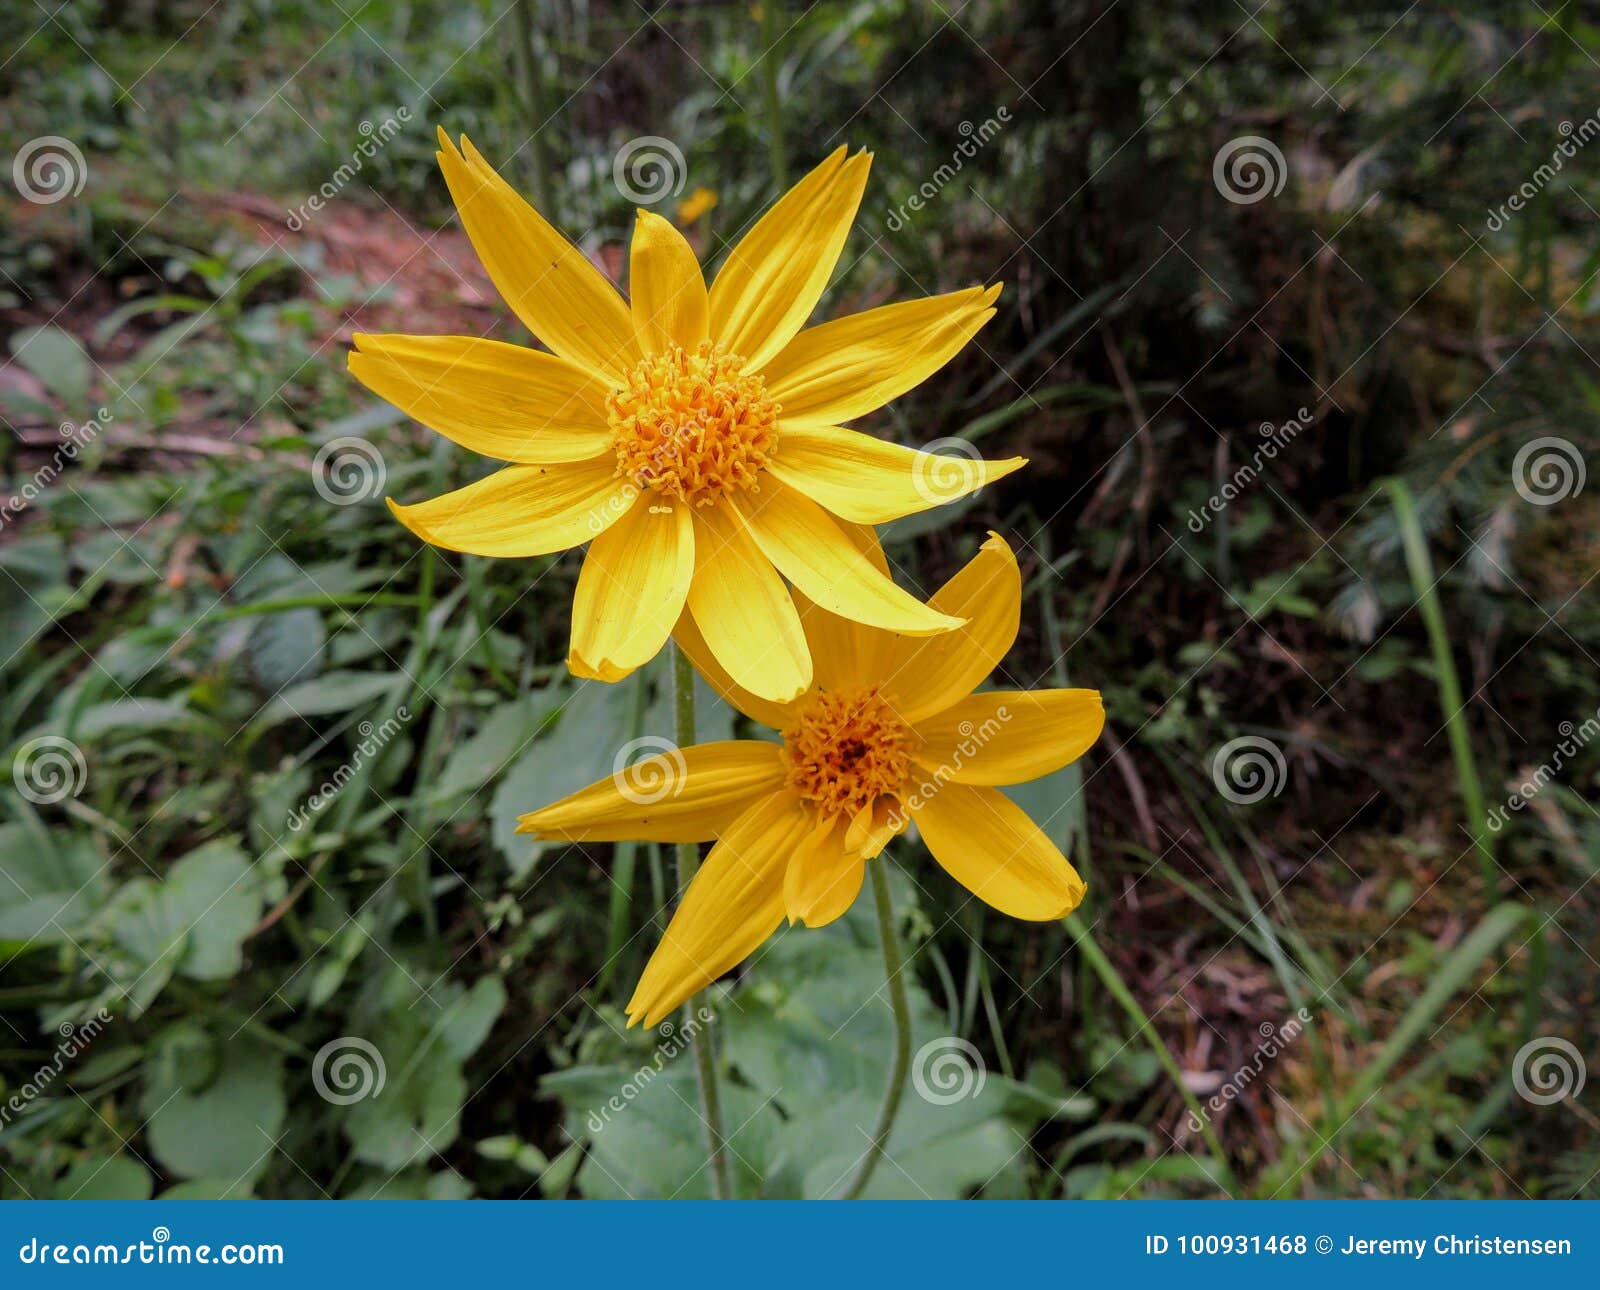 arnica flower, heartleaf, close up macro in banff national park, canada